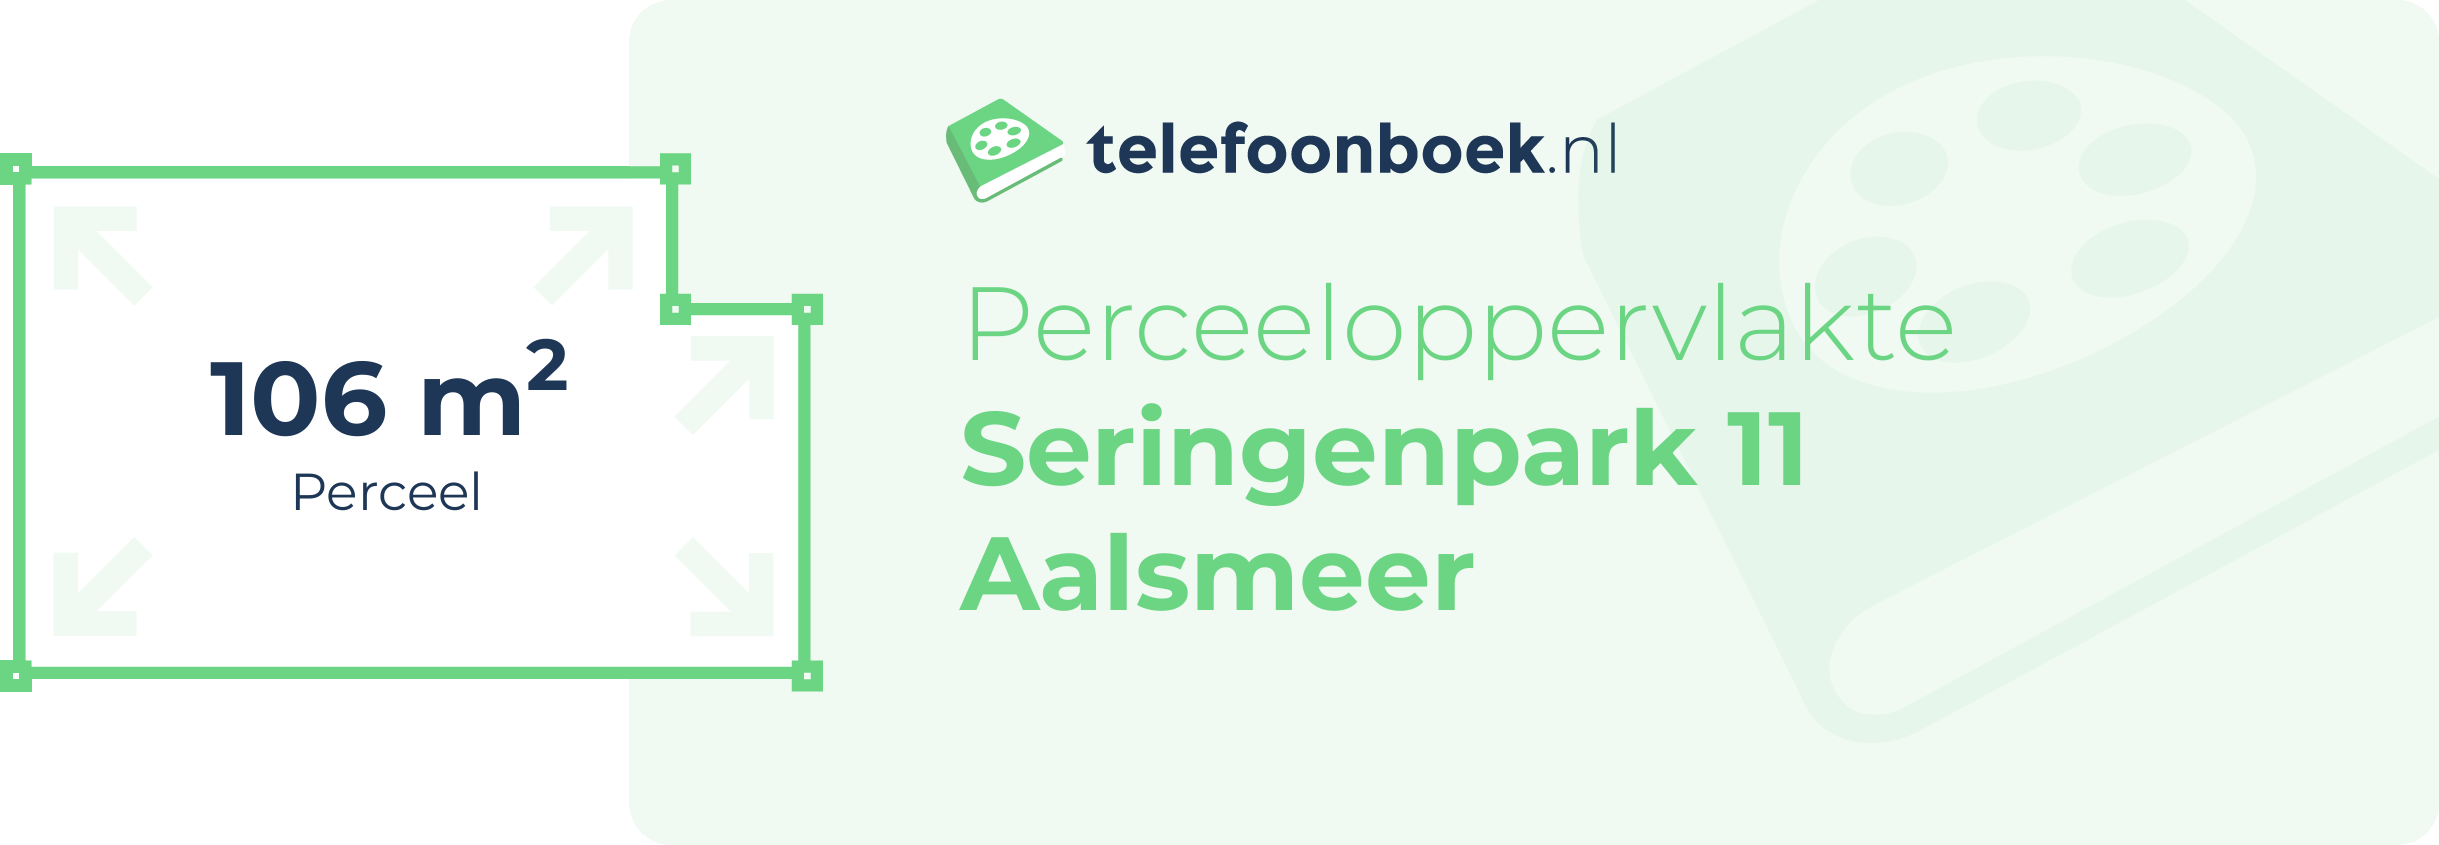 Perceeloppervlakte Seringenpark 11 Aalsmeer